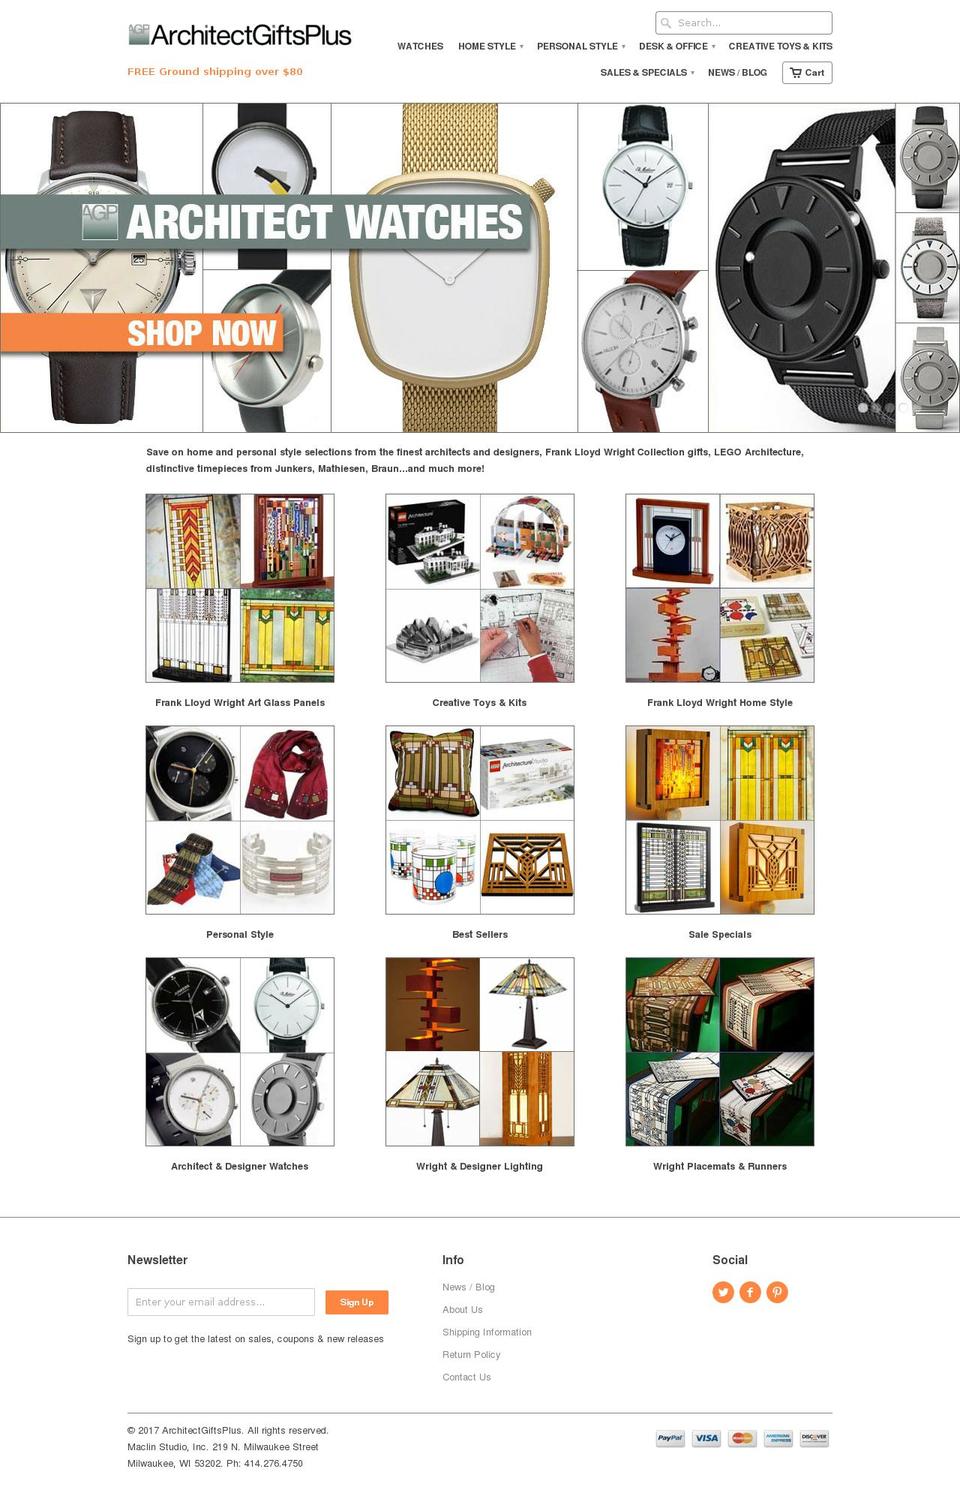 architectgiftsplus.com shopify website screenshot